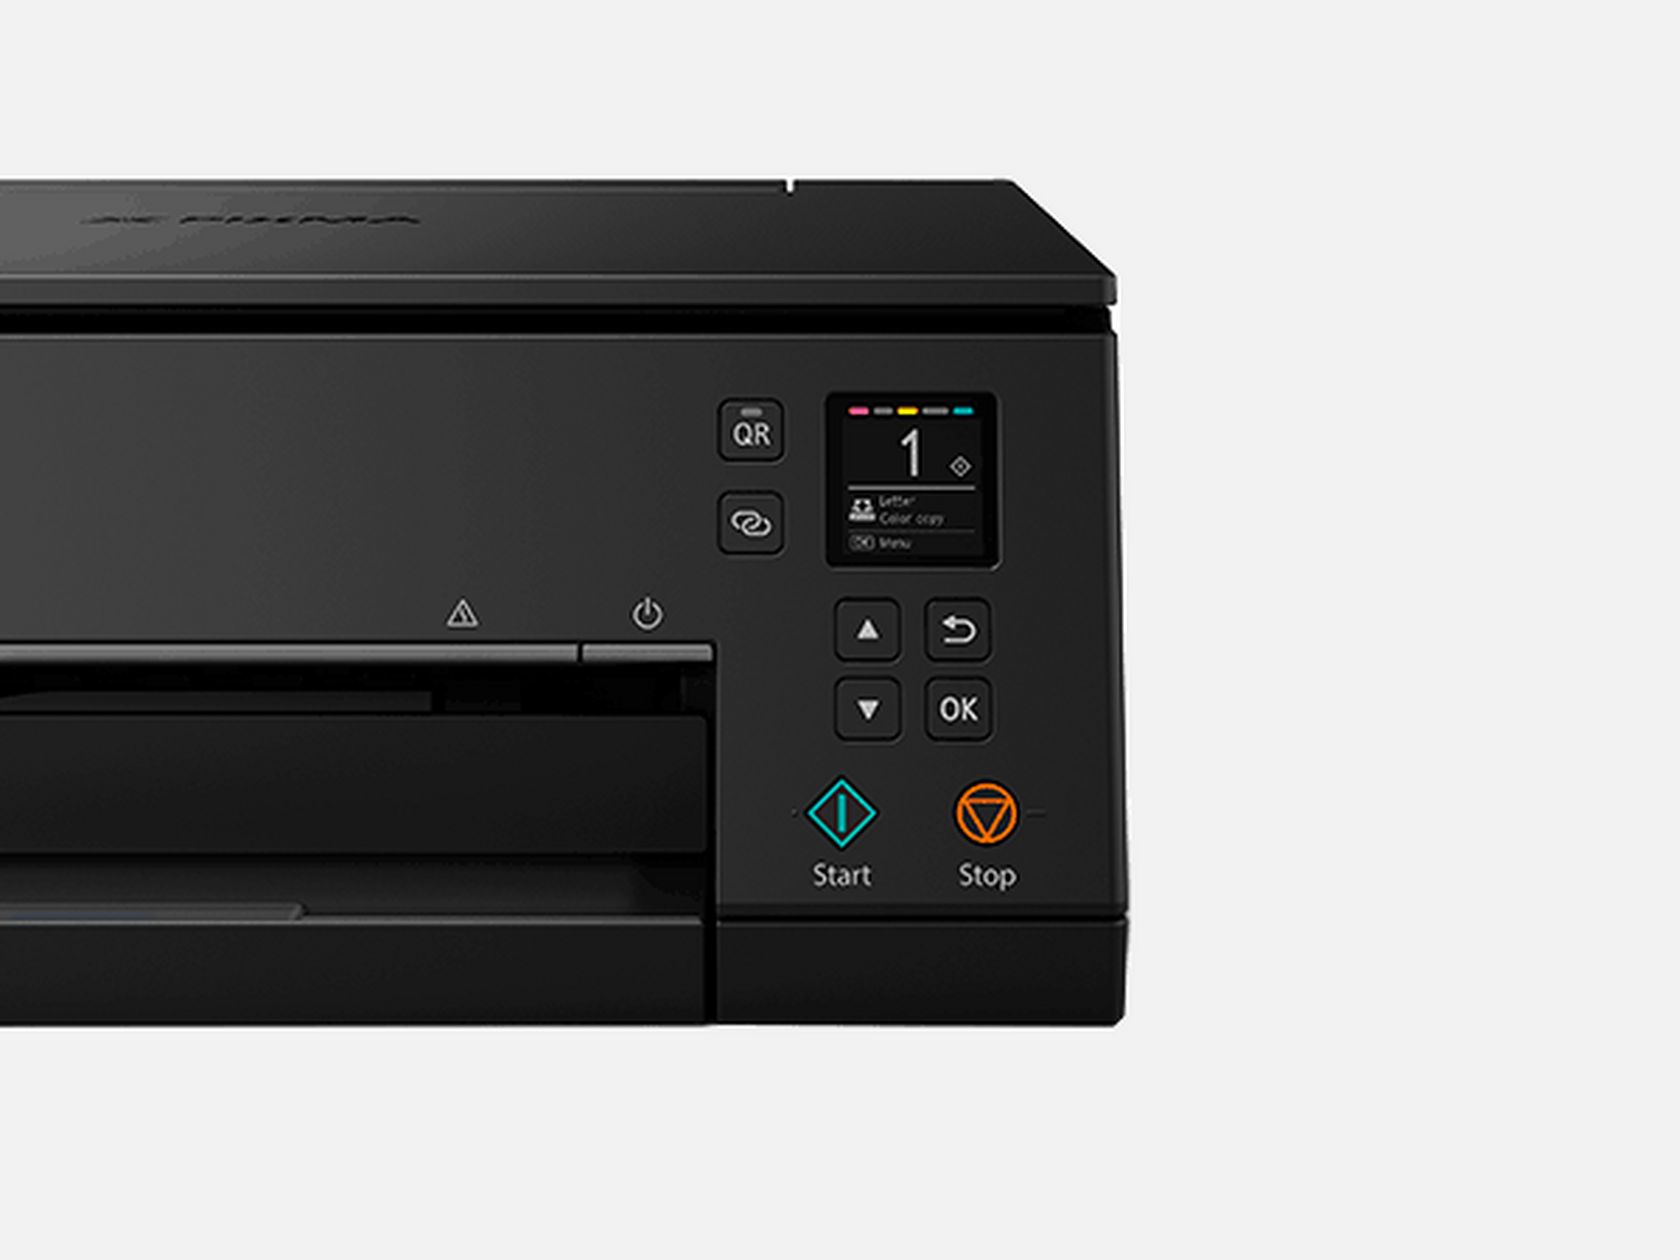 Impressora CANON TS6350 (Multifunções - Jato de Tinta)